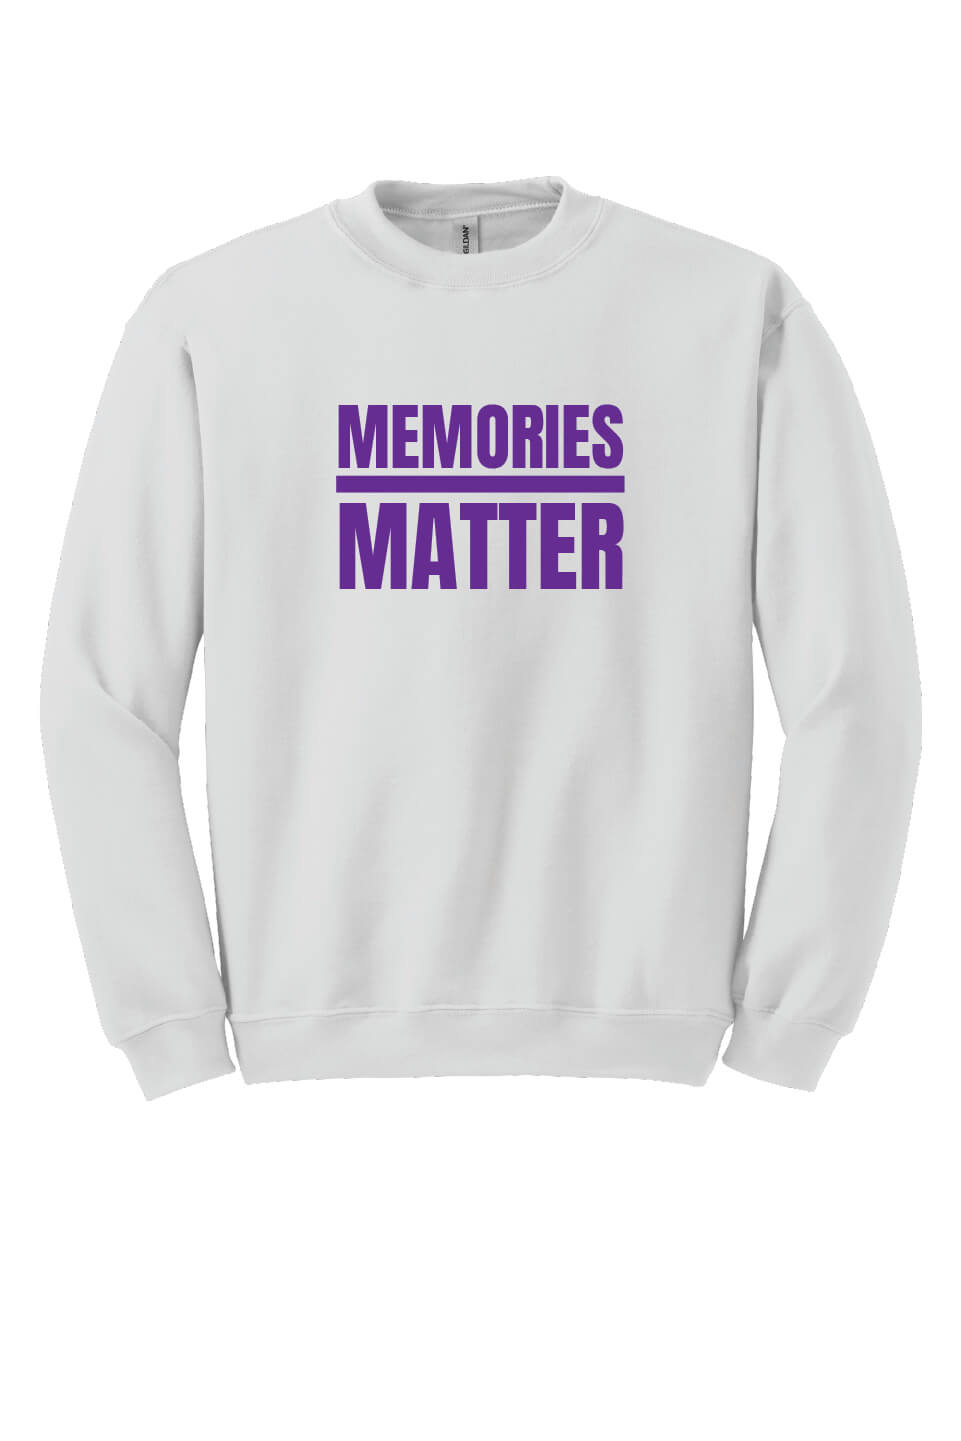 Memories Matter Flag Back Crewneck Sweatshirt white front